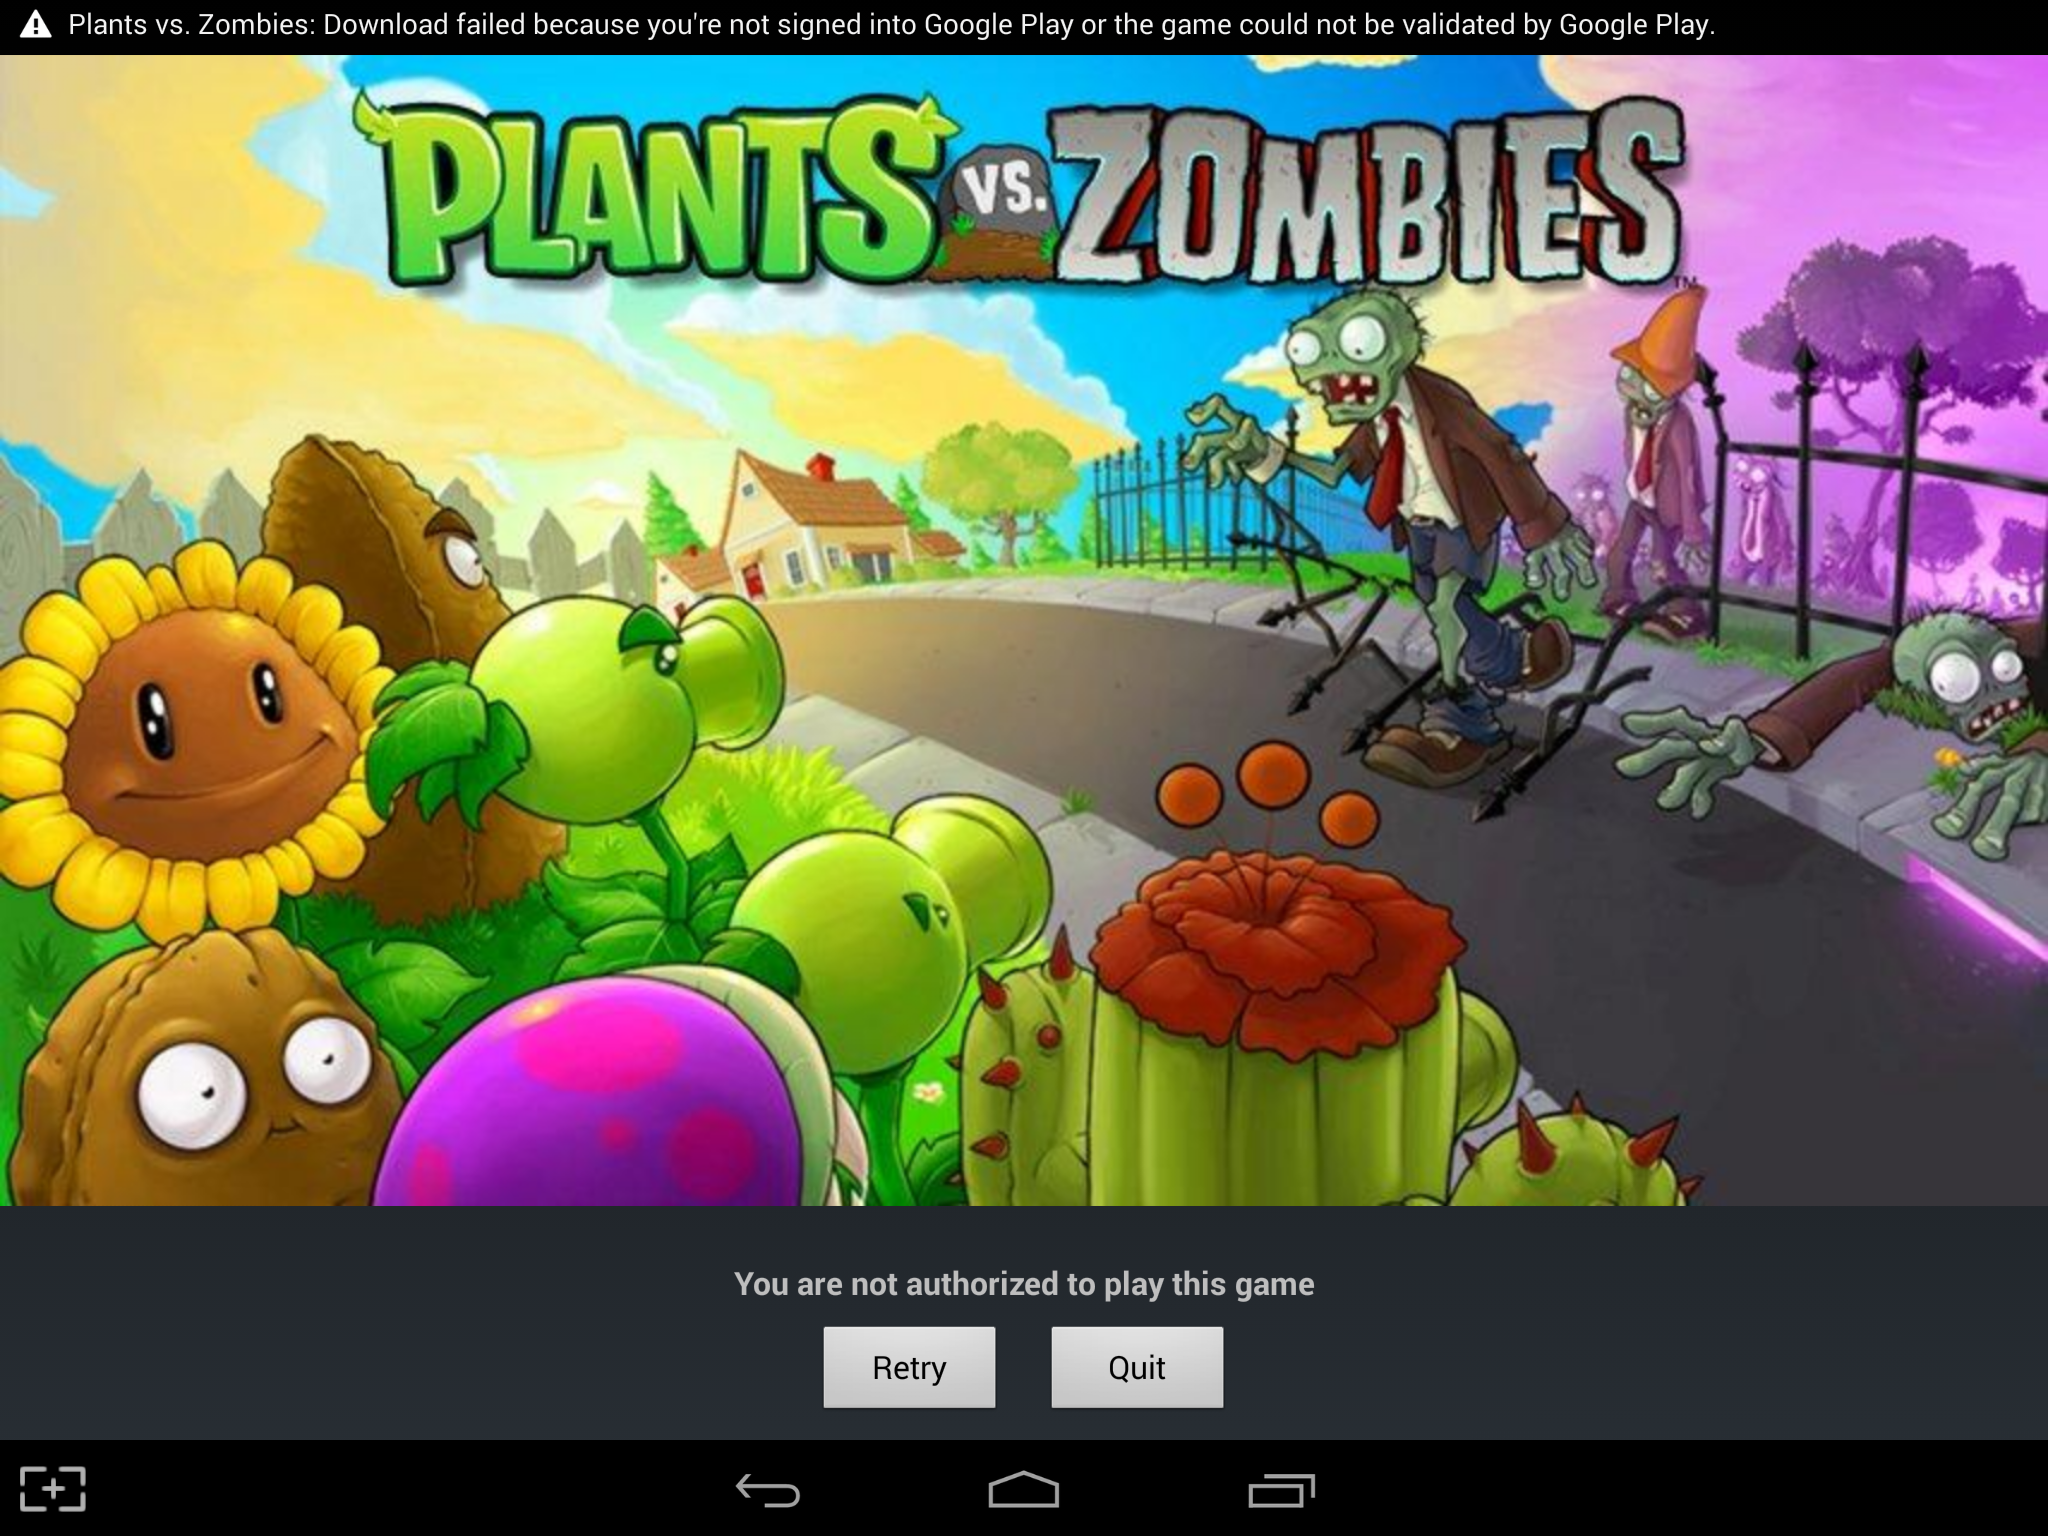 Pvz unnamed mod. PVZ экран загрузки. Растения против зомби 2 загрузочный экран. PVZ 1 растения. Plants vs Zombies загрузочный экран.